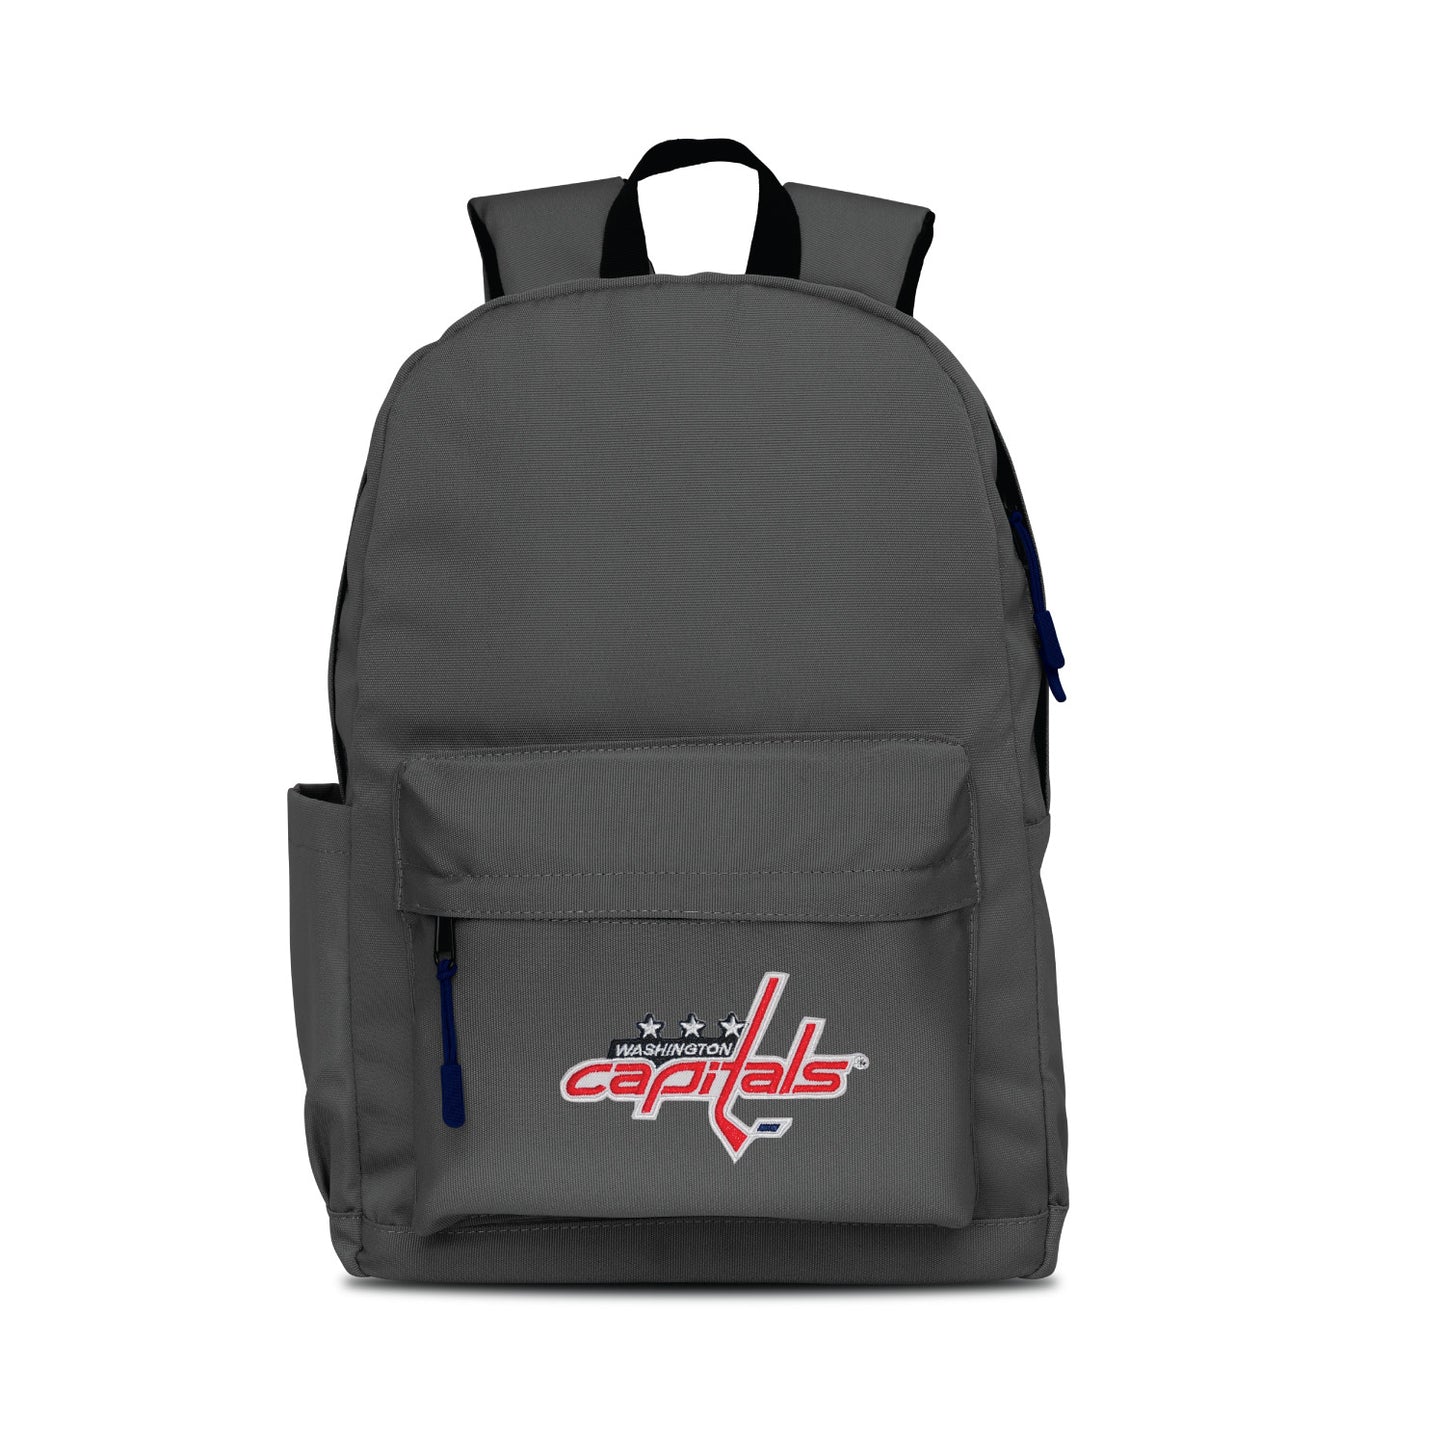 Washington Capitals Campus Laptop Backpack- Gray